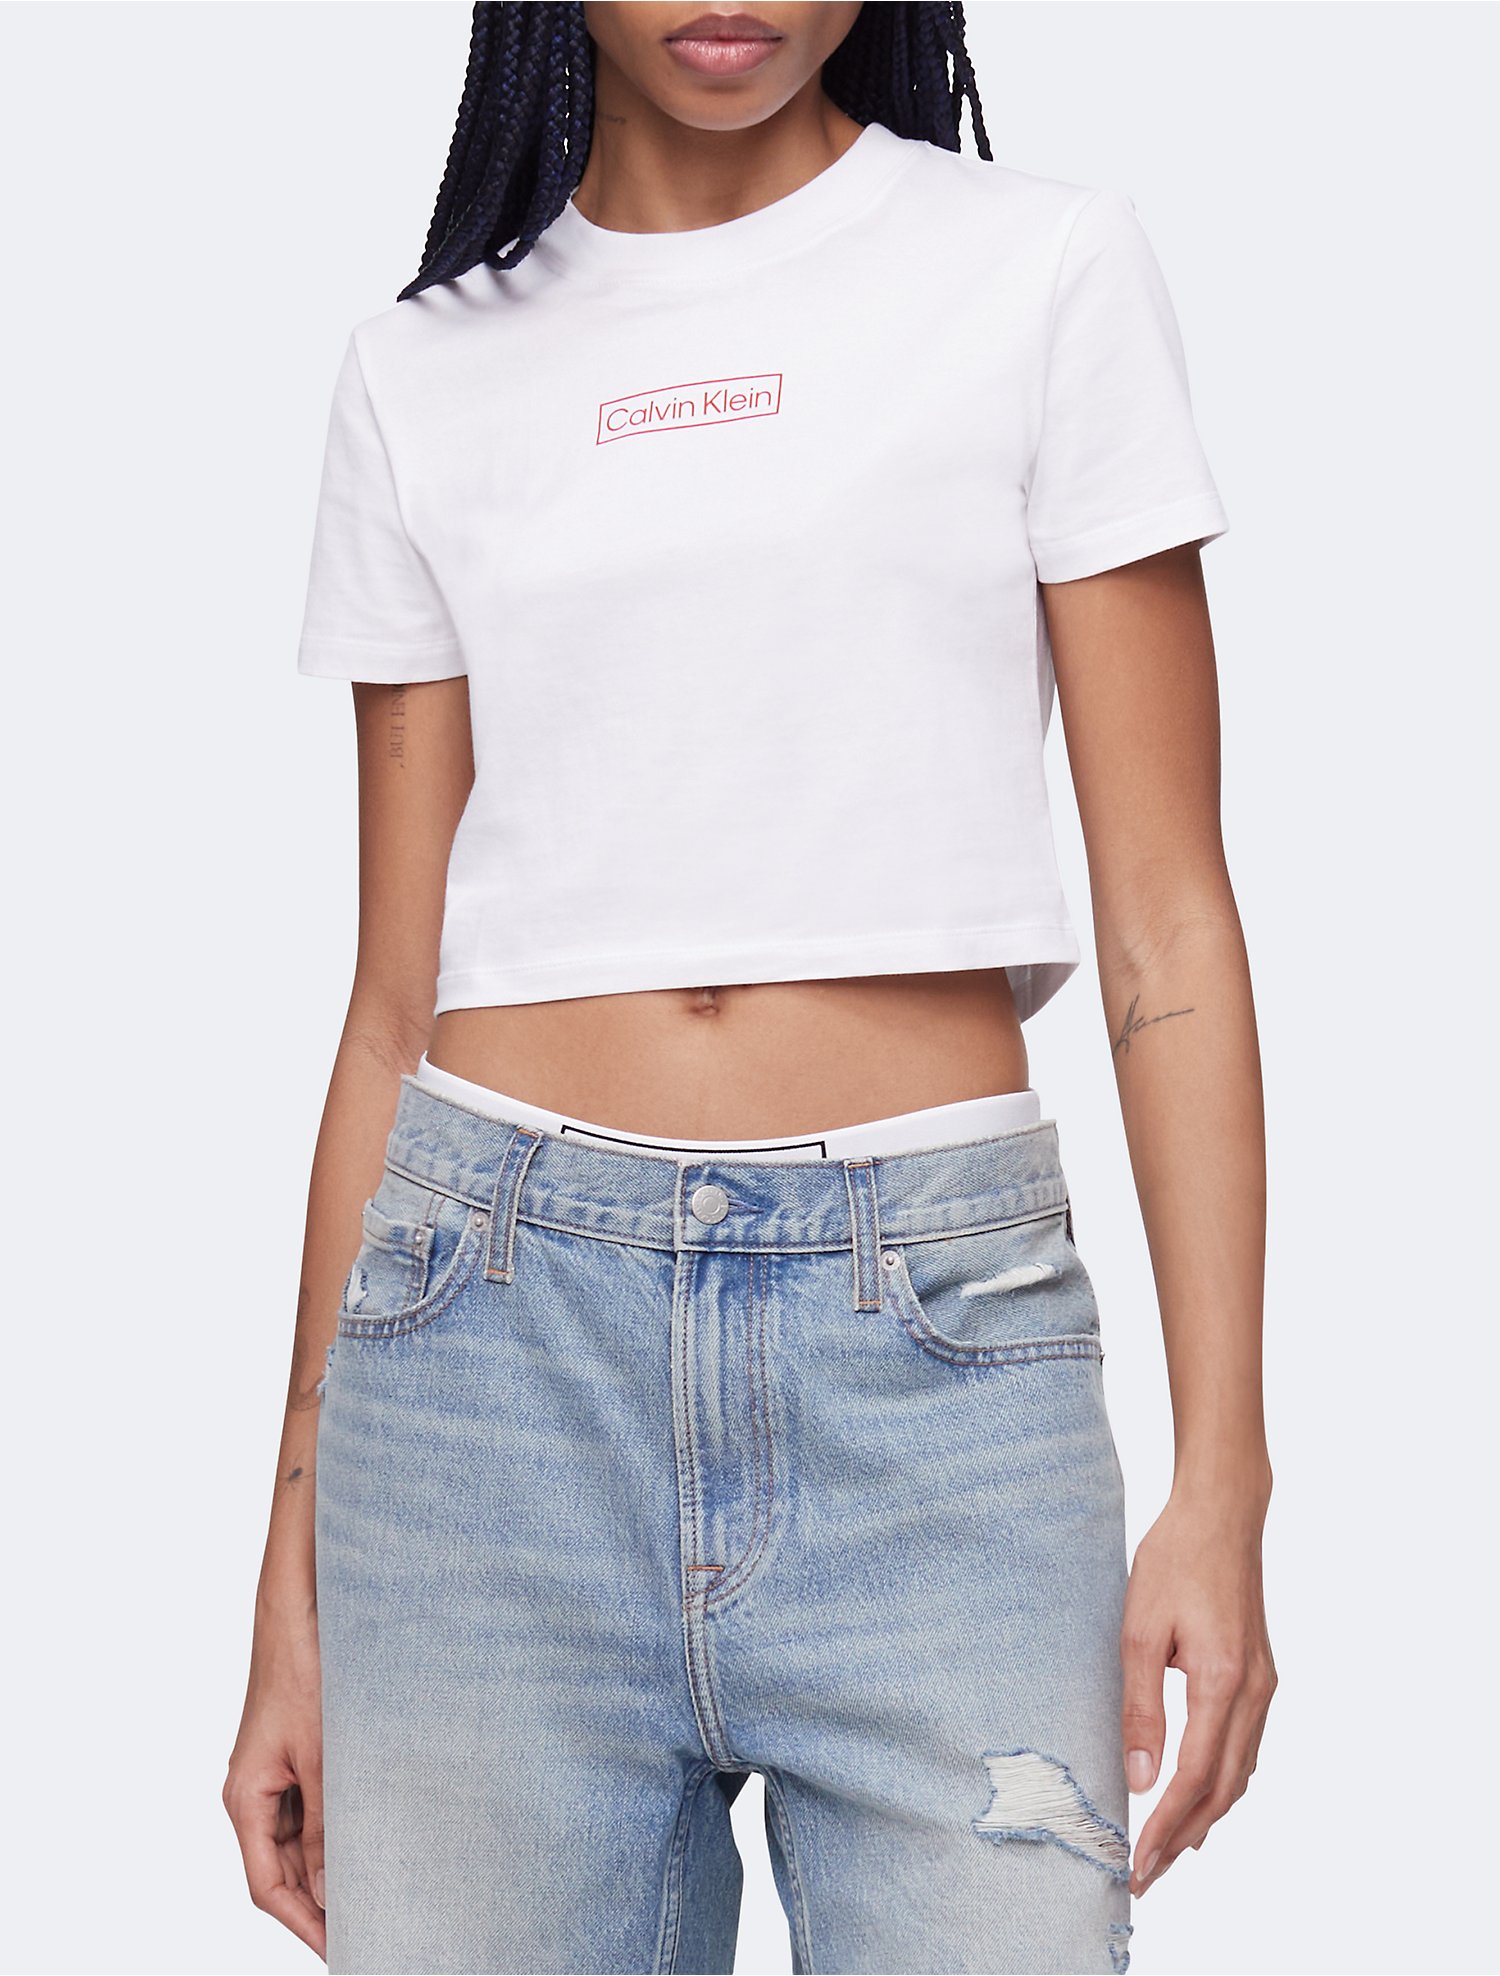 condensor stortbui moederlijk Cropped Box Logo Baby T-Shirt | Calvin Klein® USA